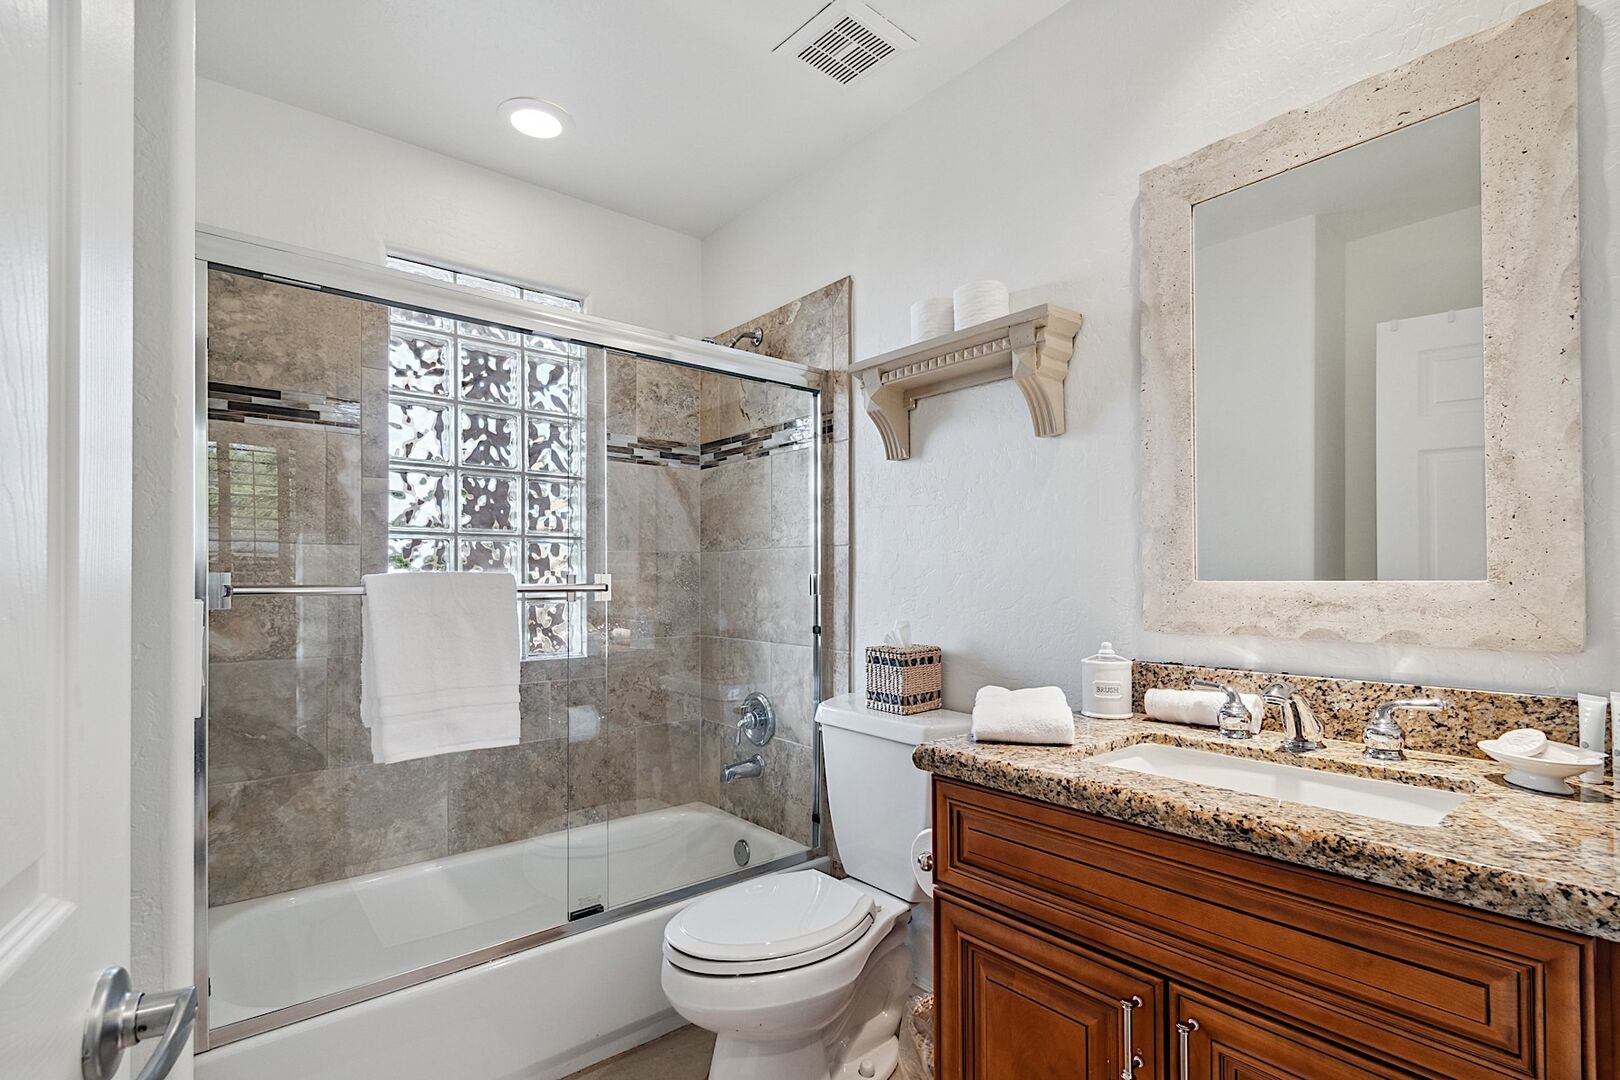 Casita bathroom has a rub / shower combo w/ single-sink vanity.